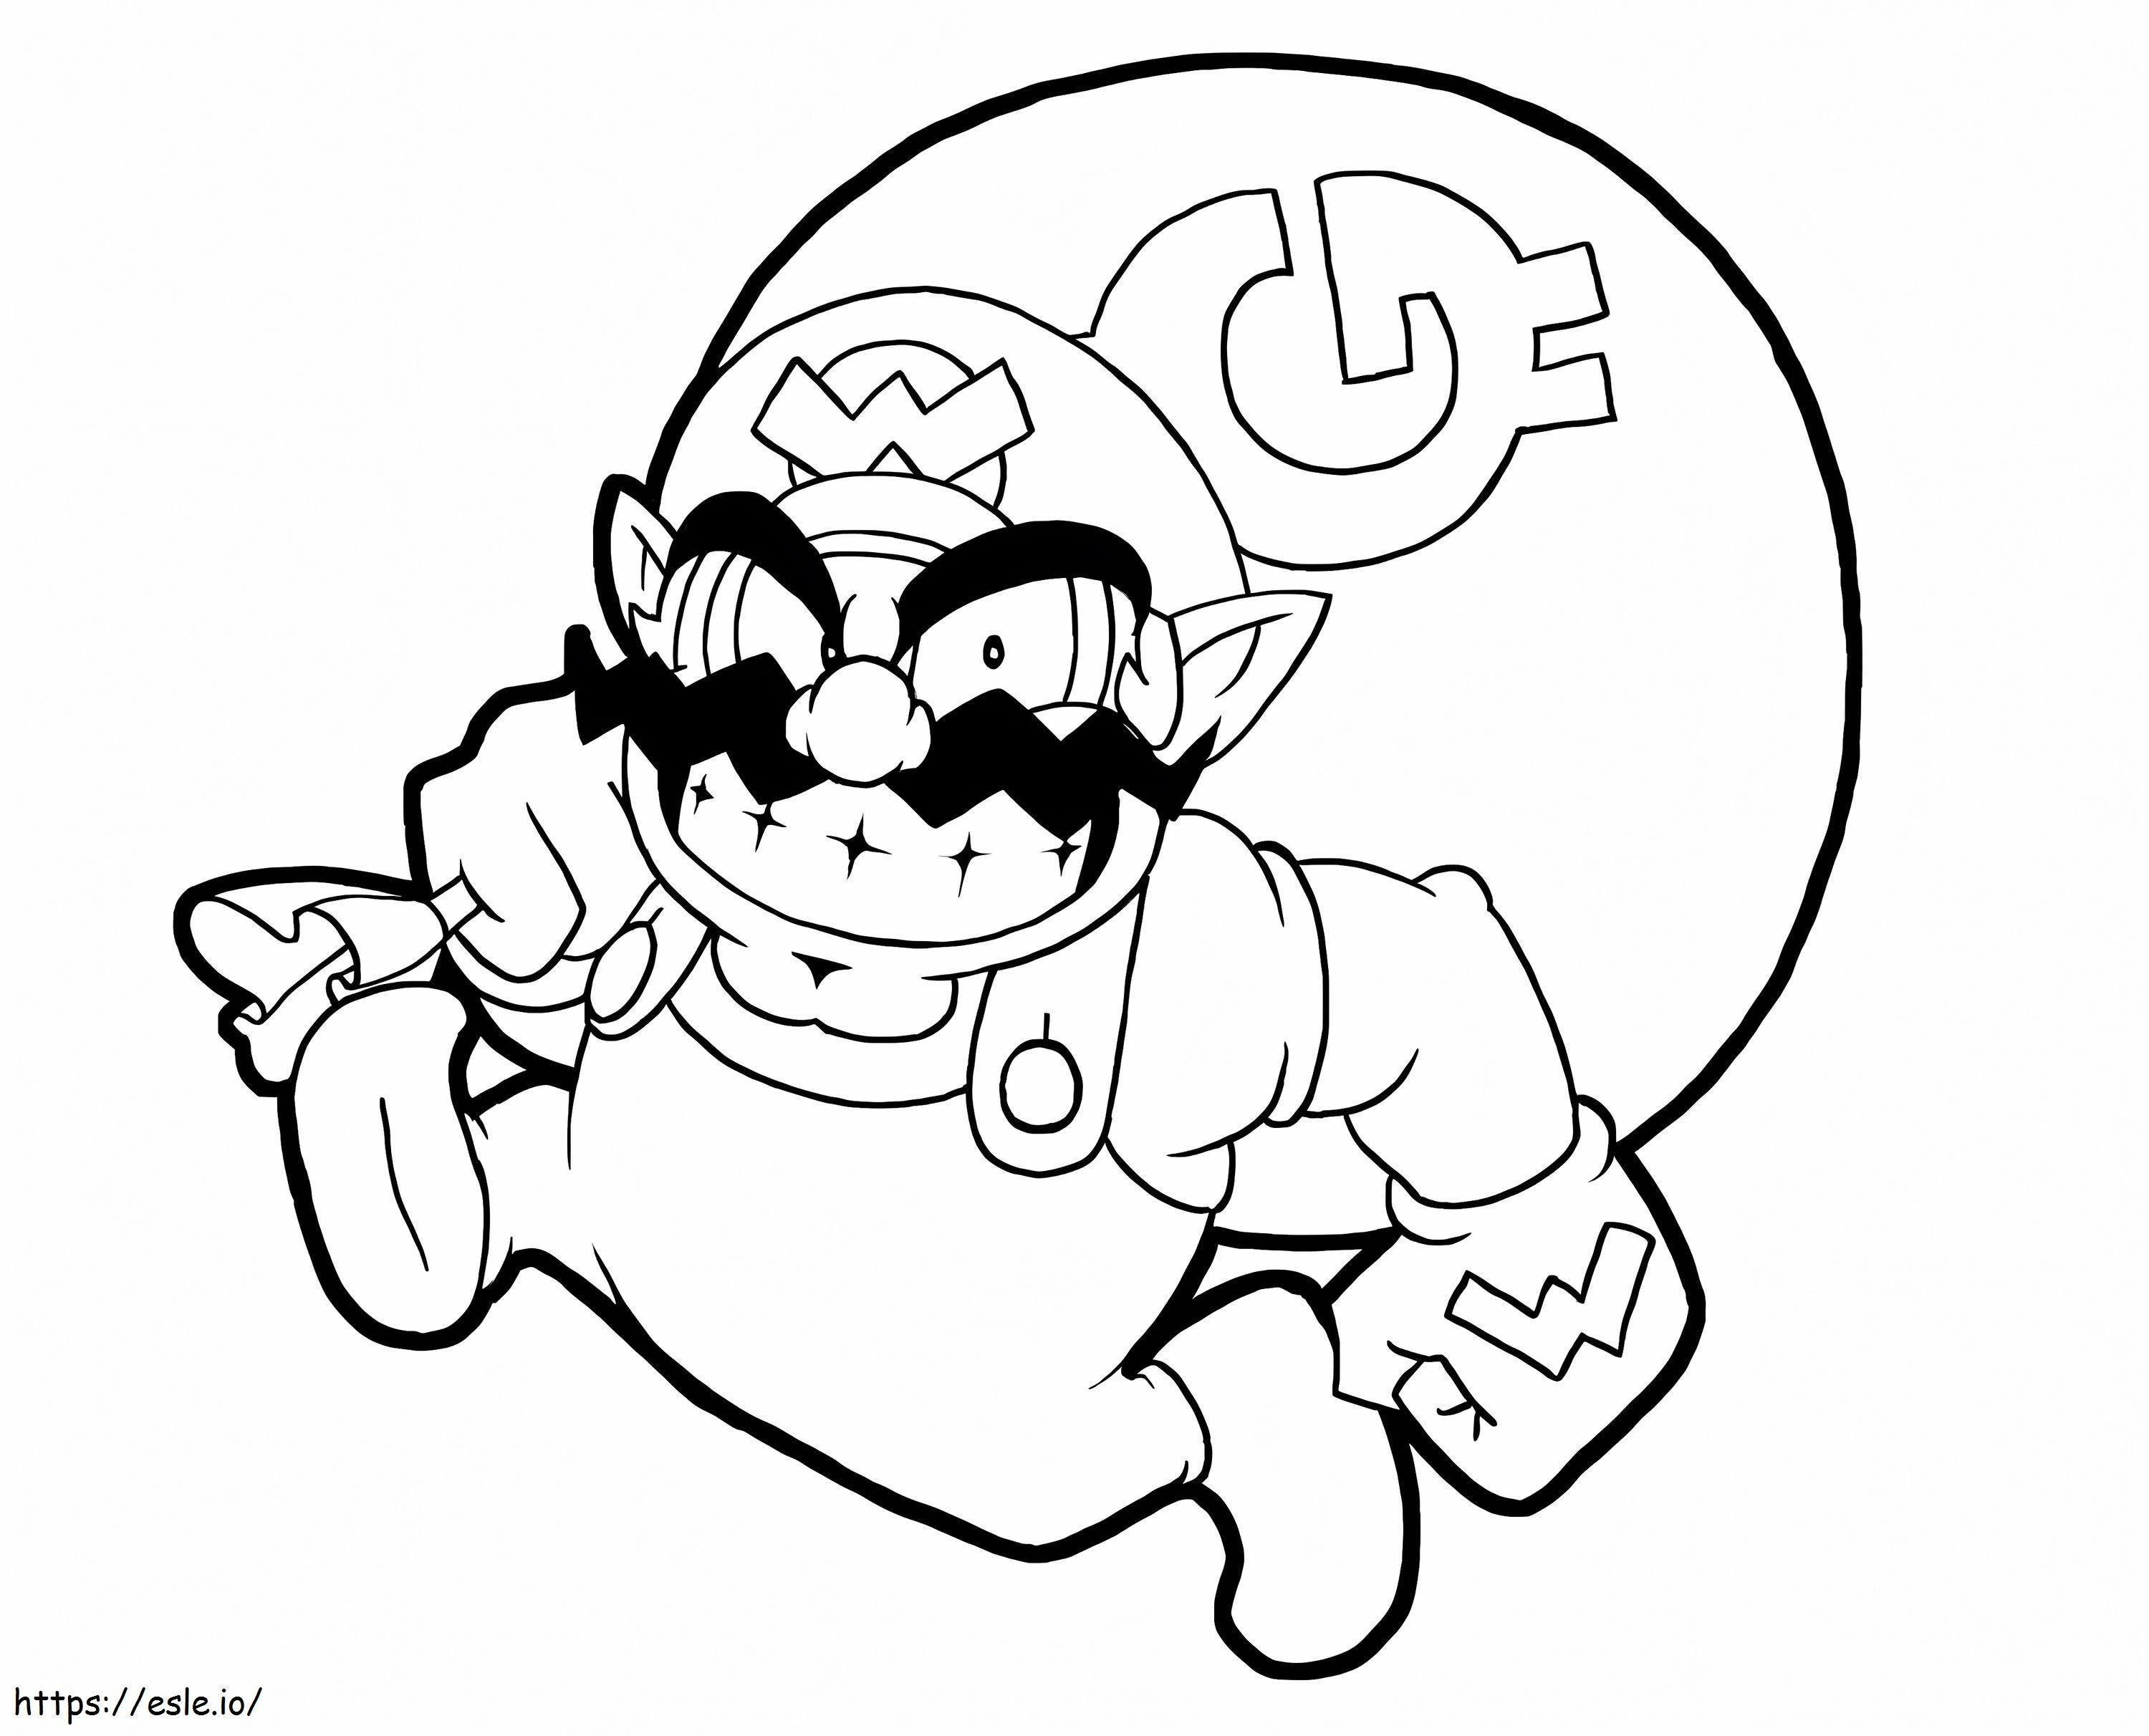 Wario z Super Mario 2 kolorowanka